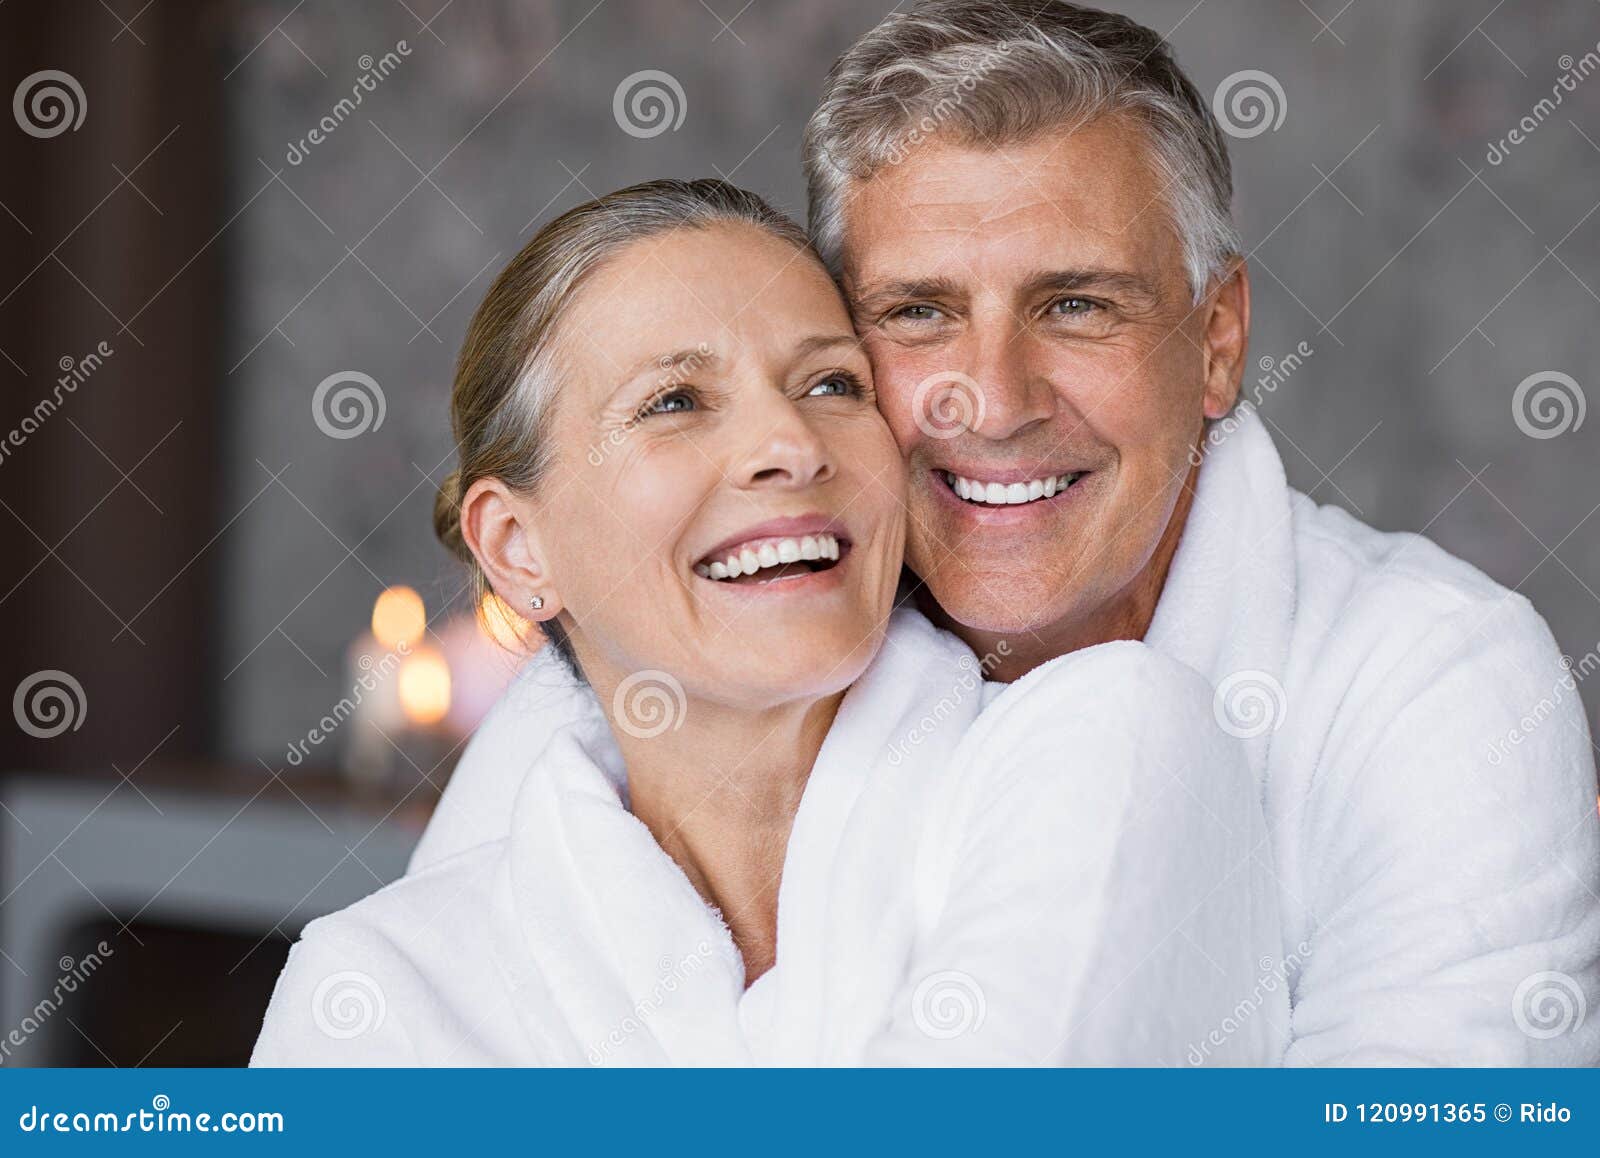 laughing senior couple embracing at spa